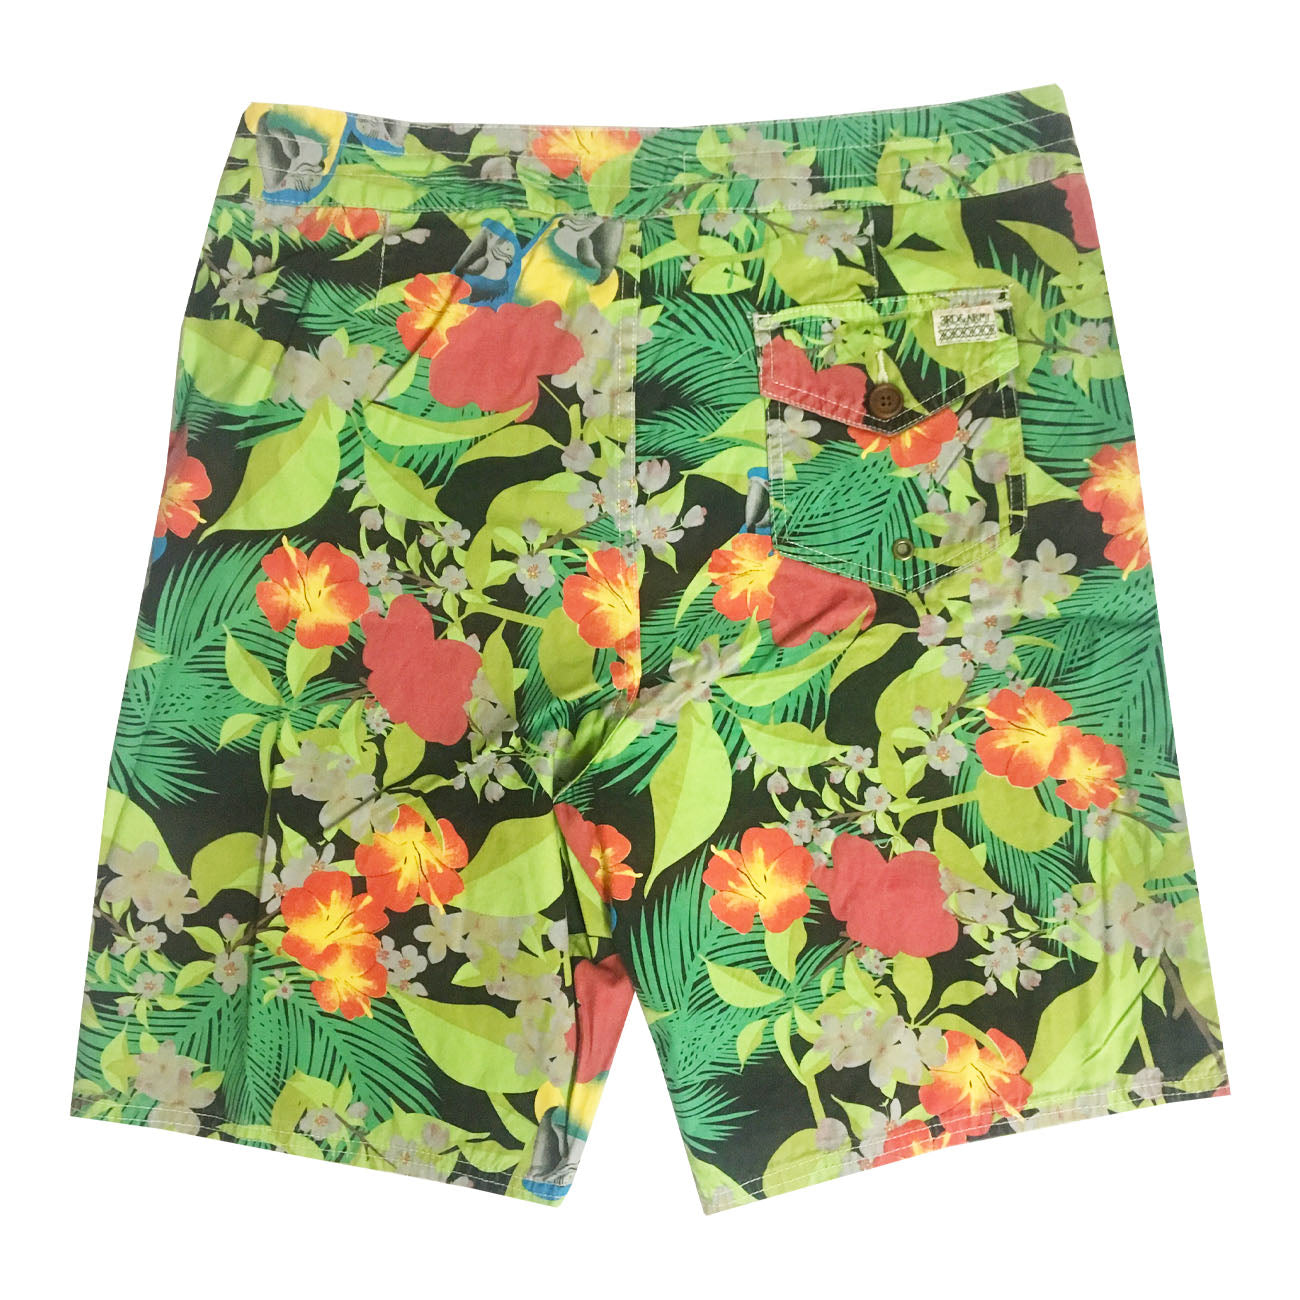 Men's Shorts Hawaiian Green by 3rd & Army 100% Cotton Tie Waist Sizes 32 34 36 38